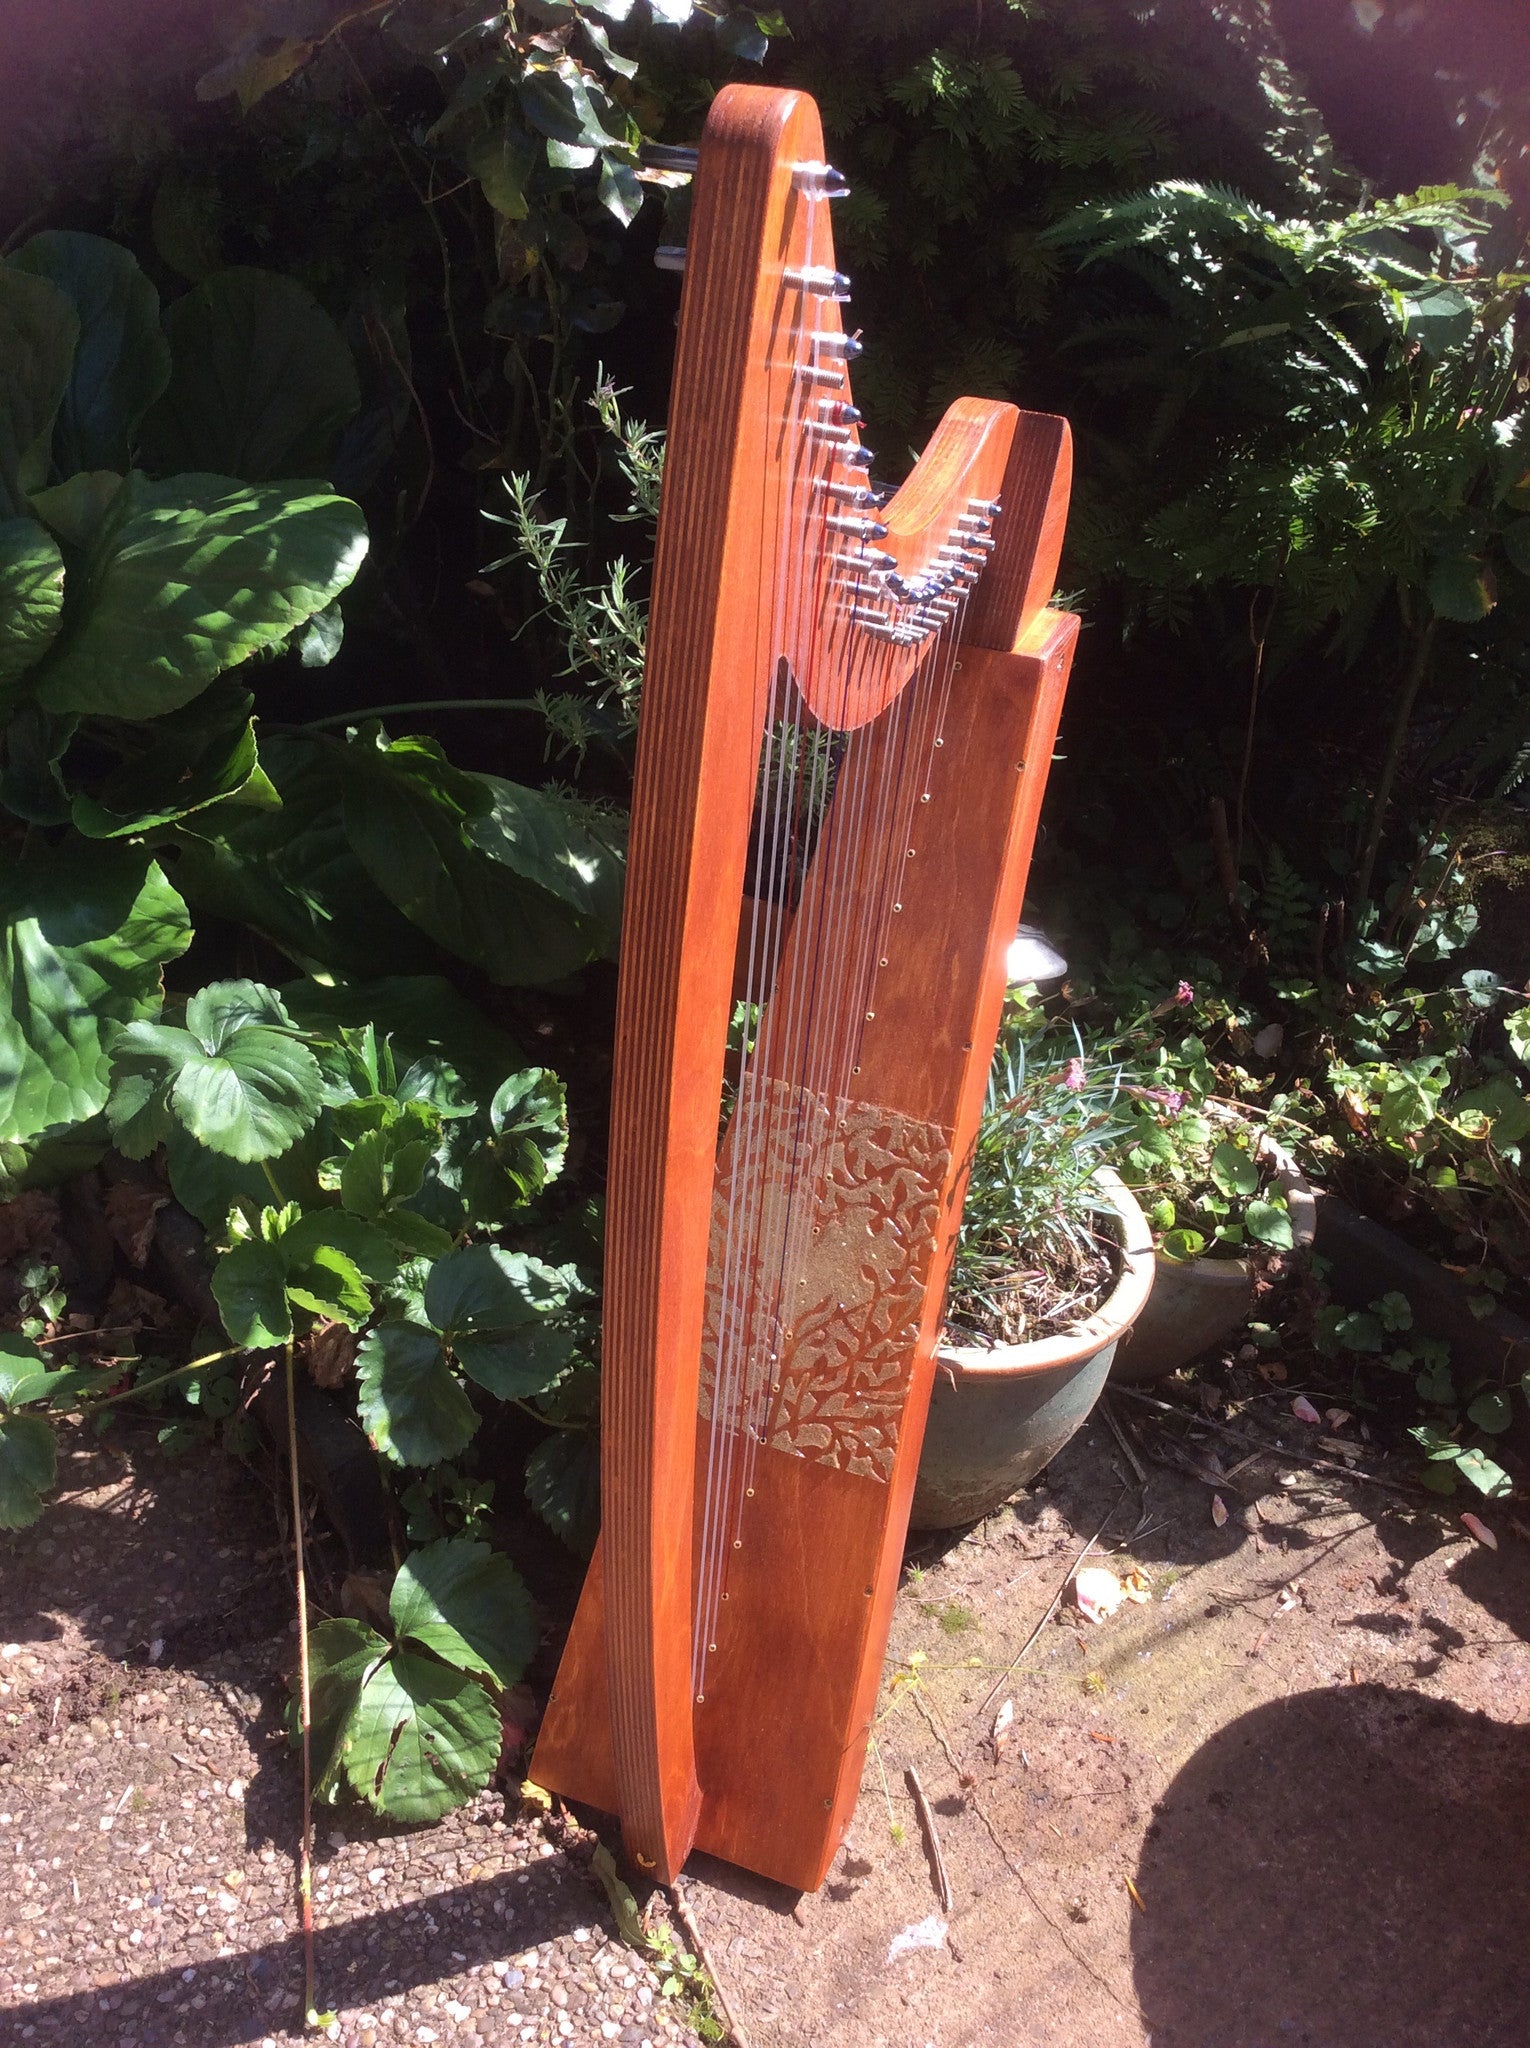 Derwent Harps Adventurer 20 in Natural Wood Finishes Made in England   derwent harps.myshopify.com